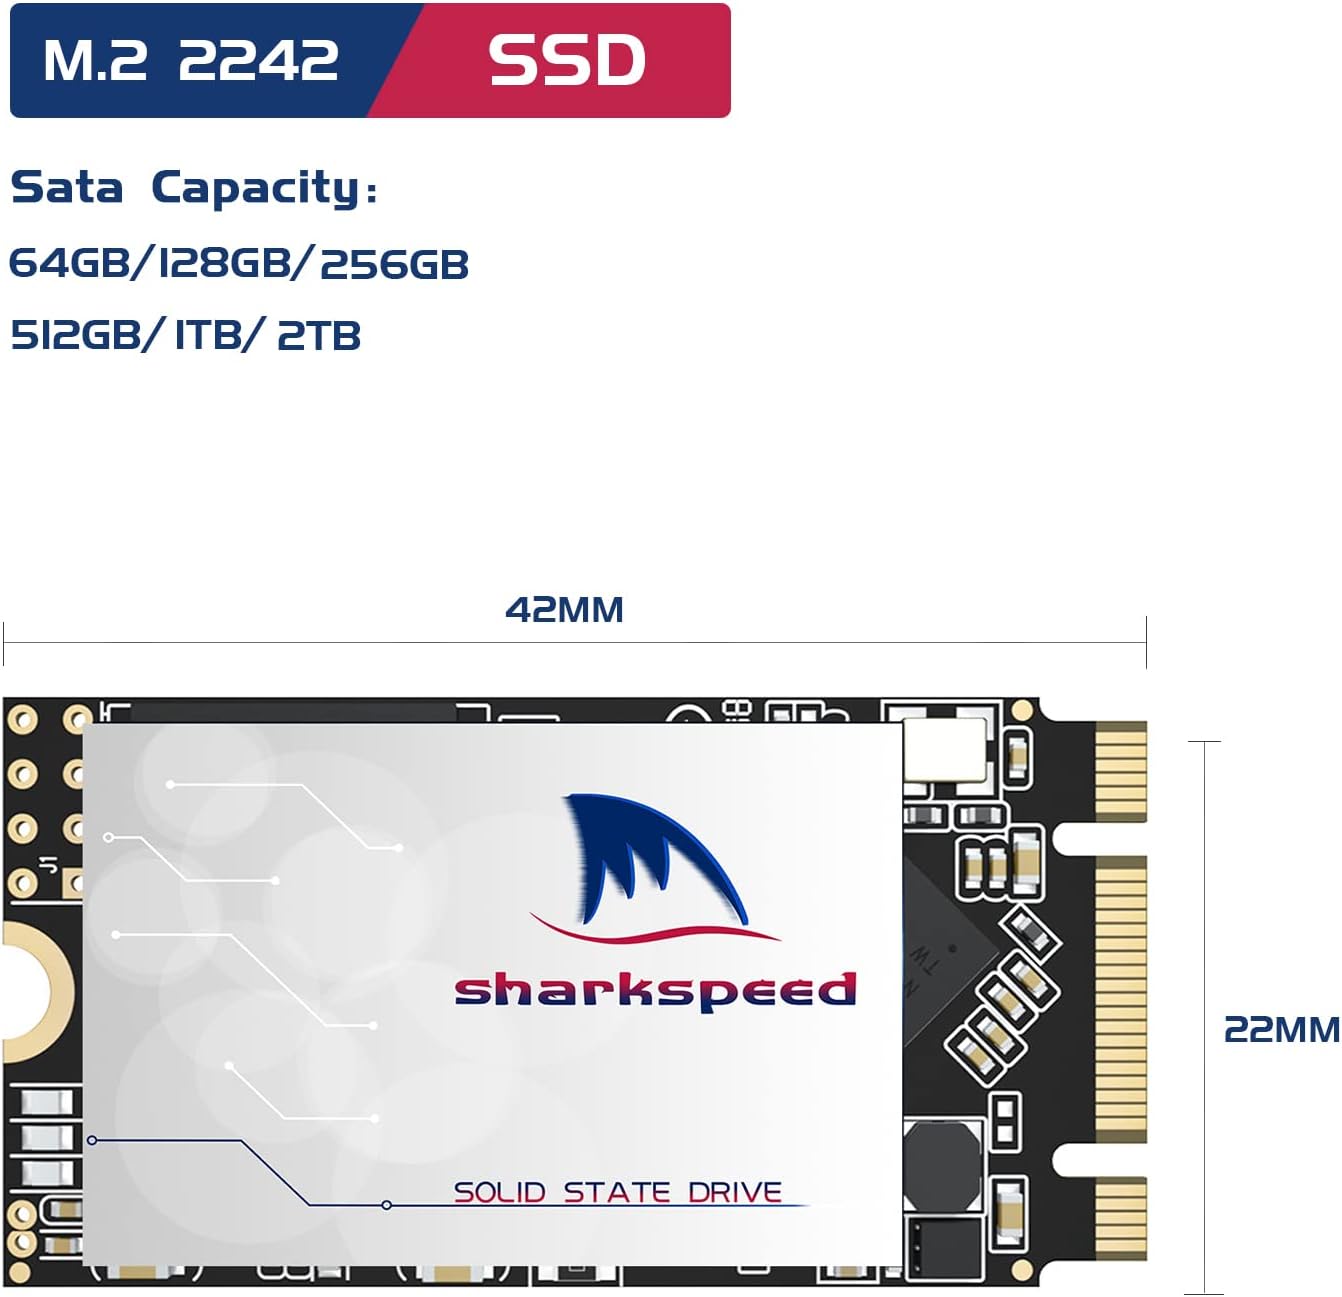 SSD 1TB M.2 2242 NGFF Plus Internal M2 SSD 3D NAND SATA III 6 Gb/s, Solid State Drive for Notebooks Desktop PC (M.2 2242 1TB)